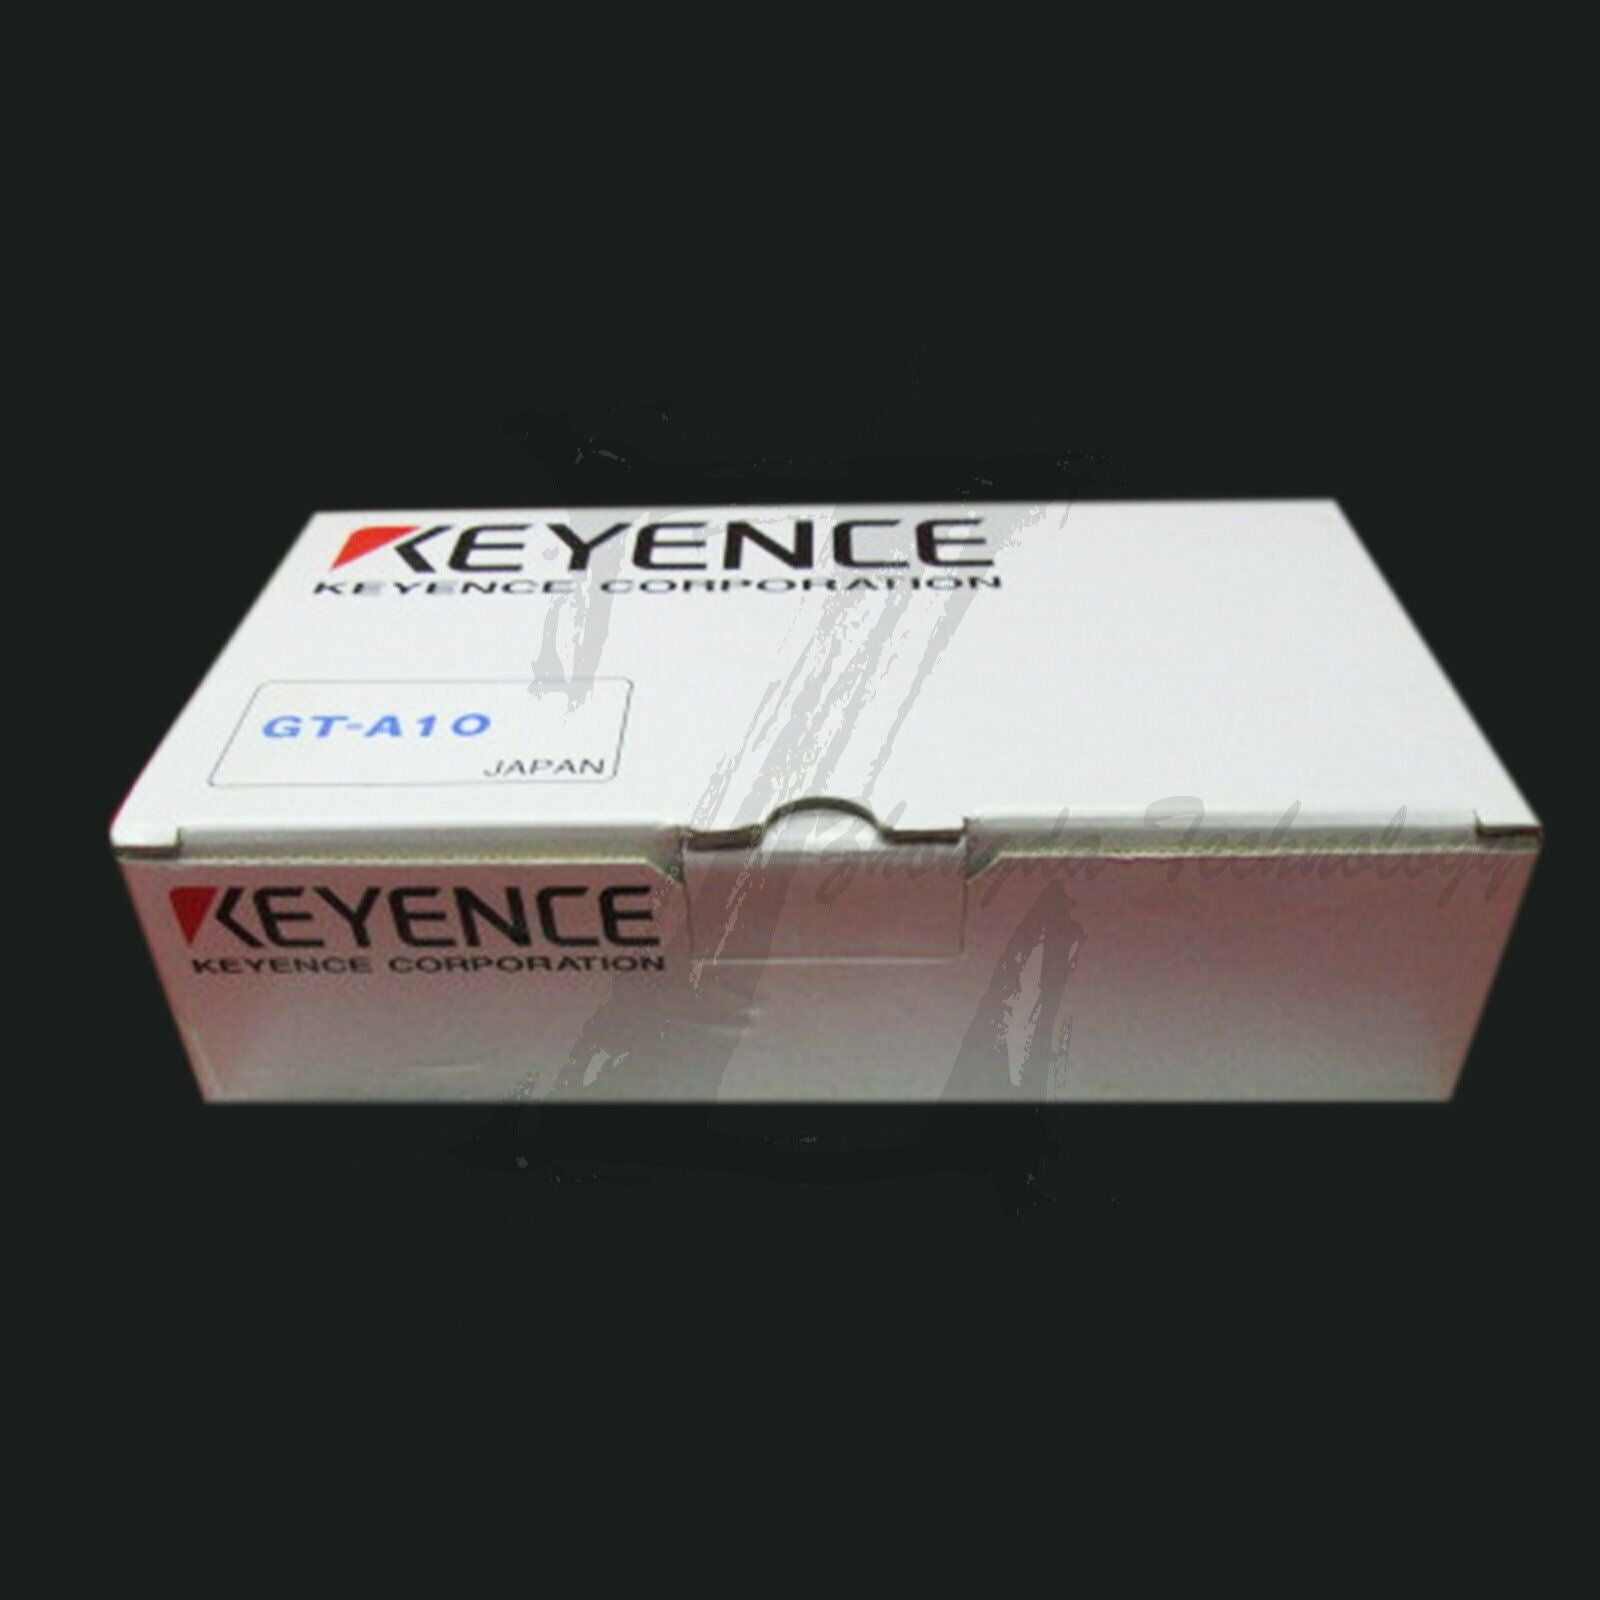 NEW IN BOX 1PC Keyence Sensor GT-A10 GTA10